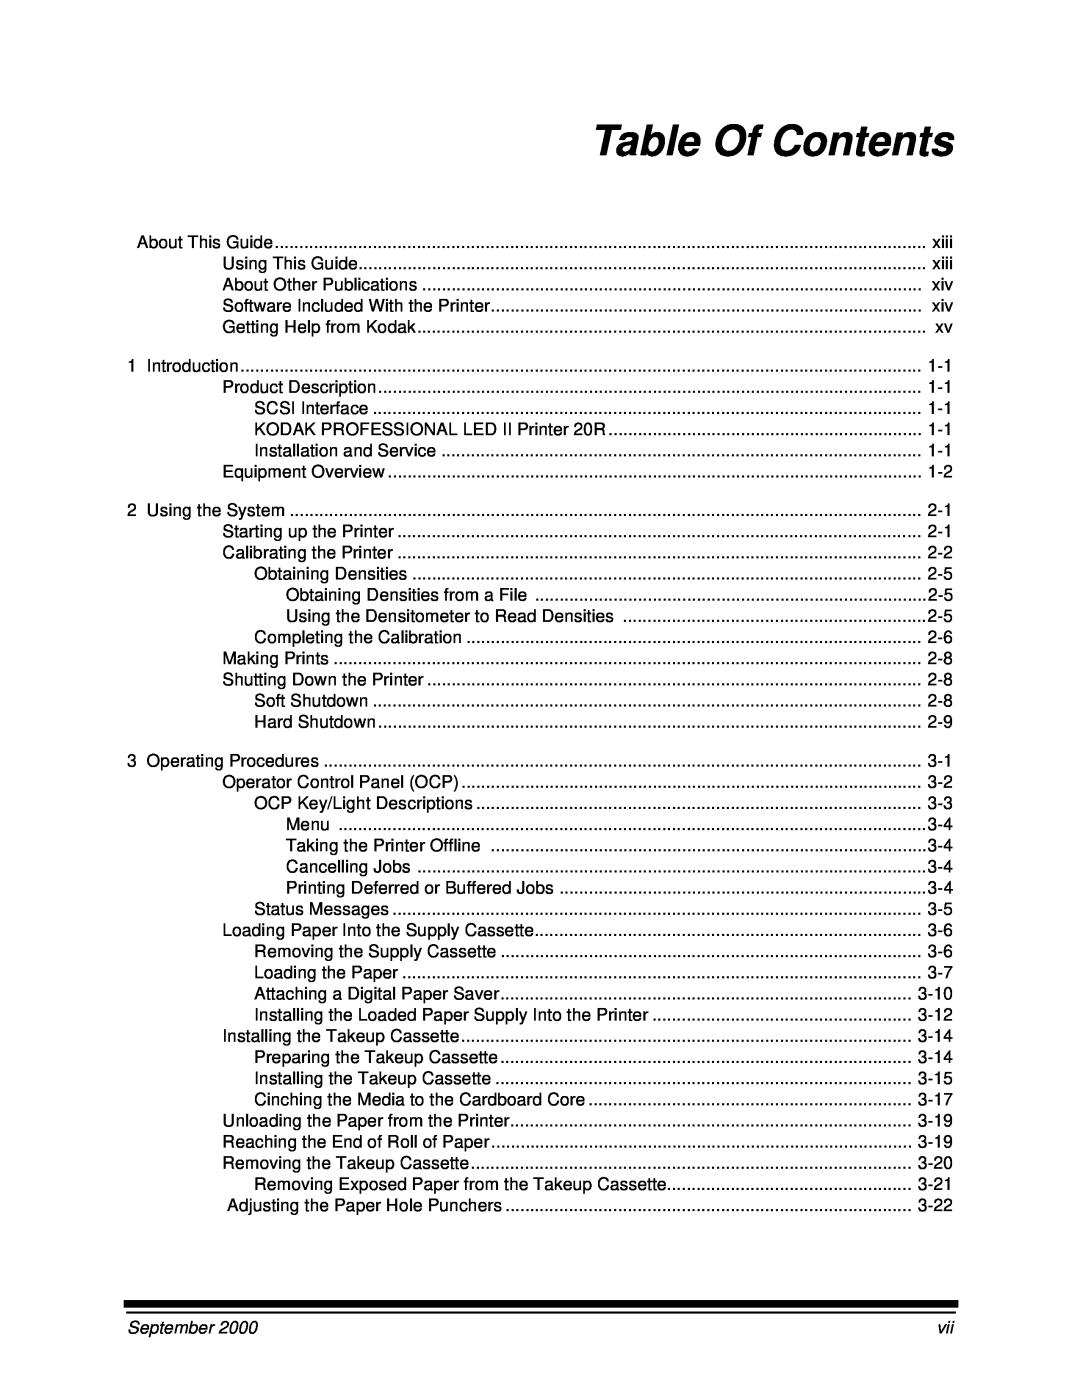 Kodak 20R manual Table Of Contents, September 